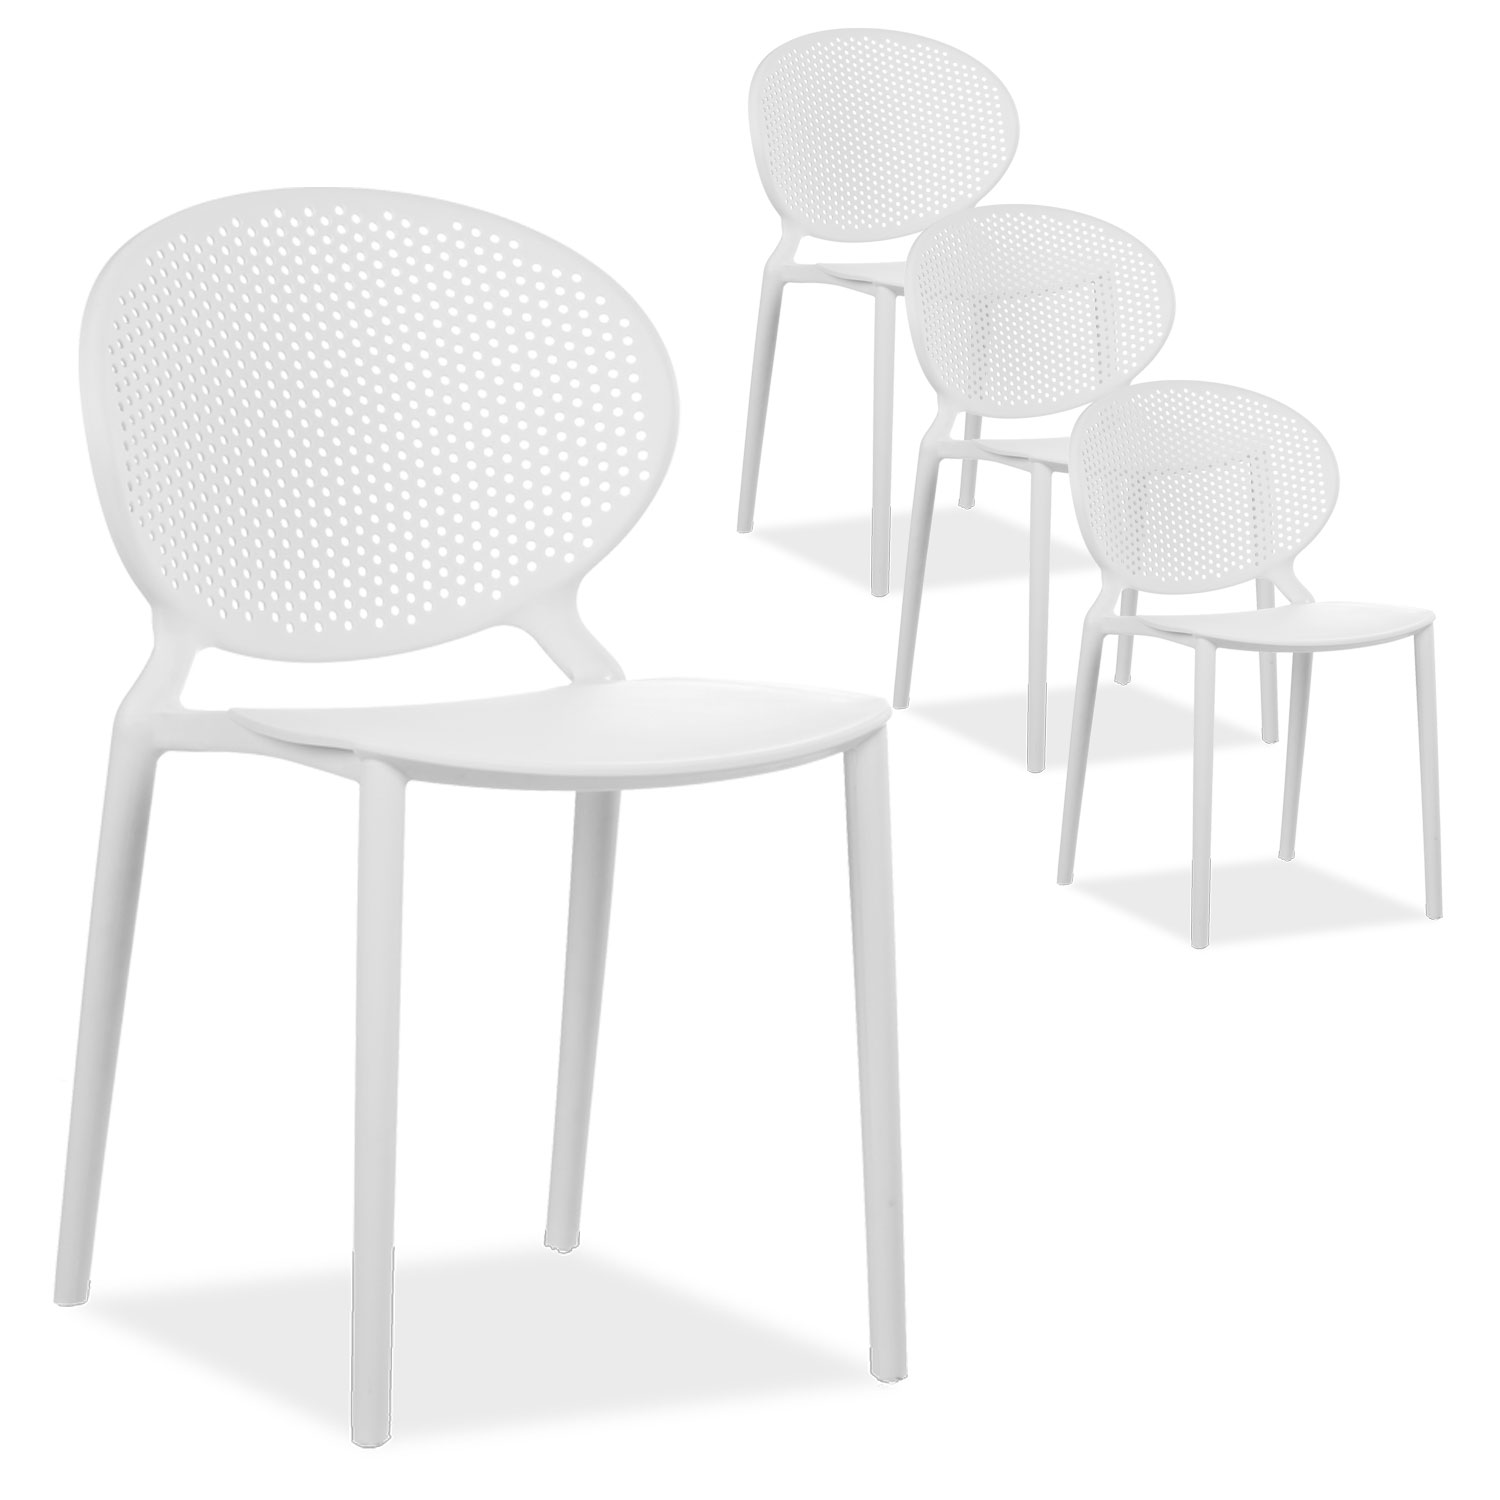 Modernes Gartenstuhl 4er Set verschiedene Farben Stühle Küchenstühle Kunststoff Stapelstühle Balkonstuhl Outdoor-Stuhl